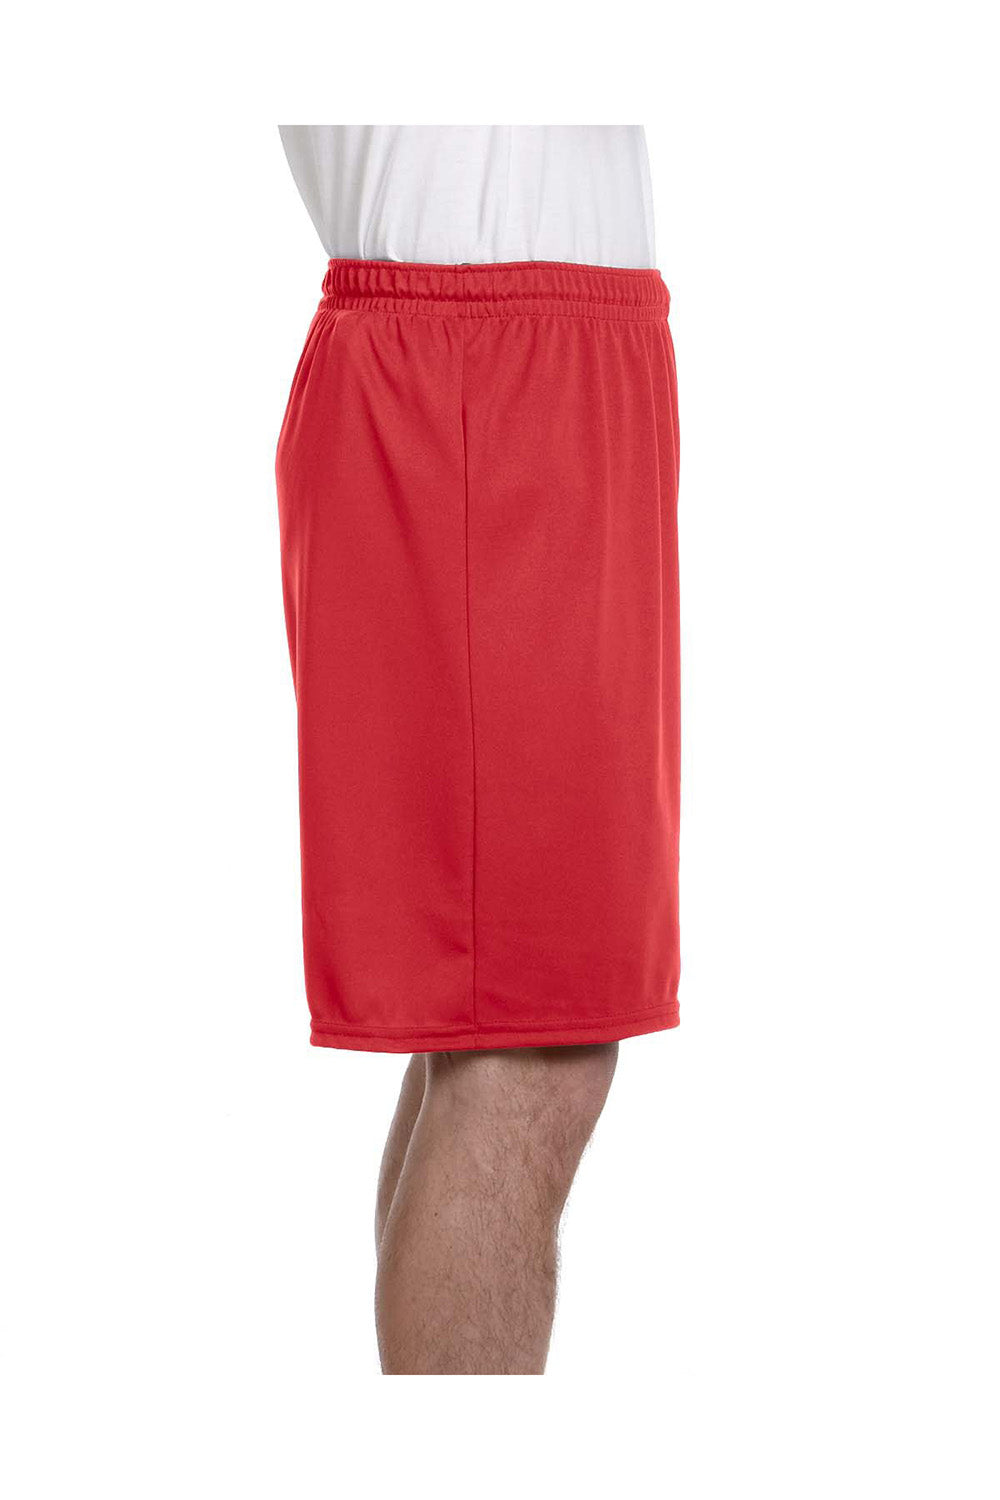 Augusta Sportswear 1420 Mens Training Shorts Red Model Side